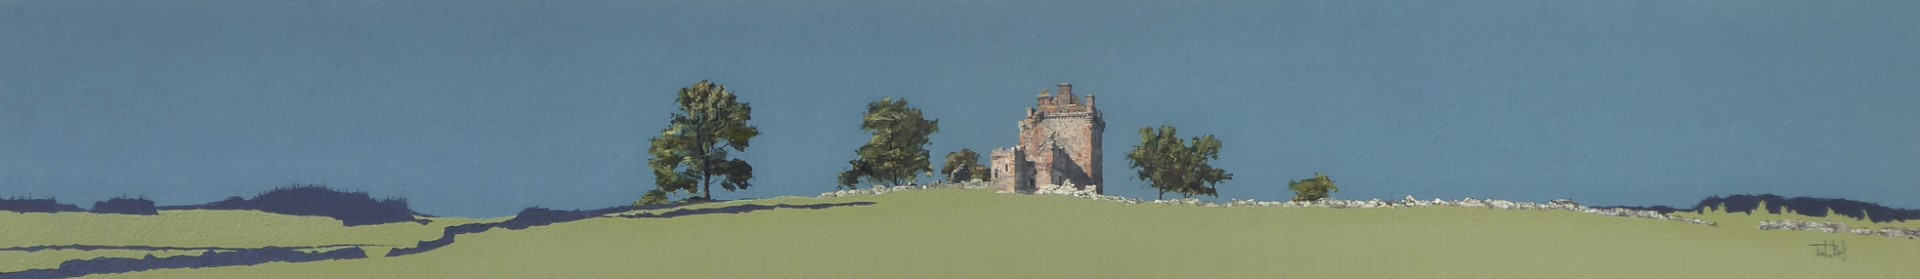 John_Bell_Balvaird Castle (size 48 x 7 inches)